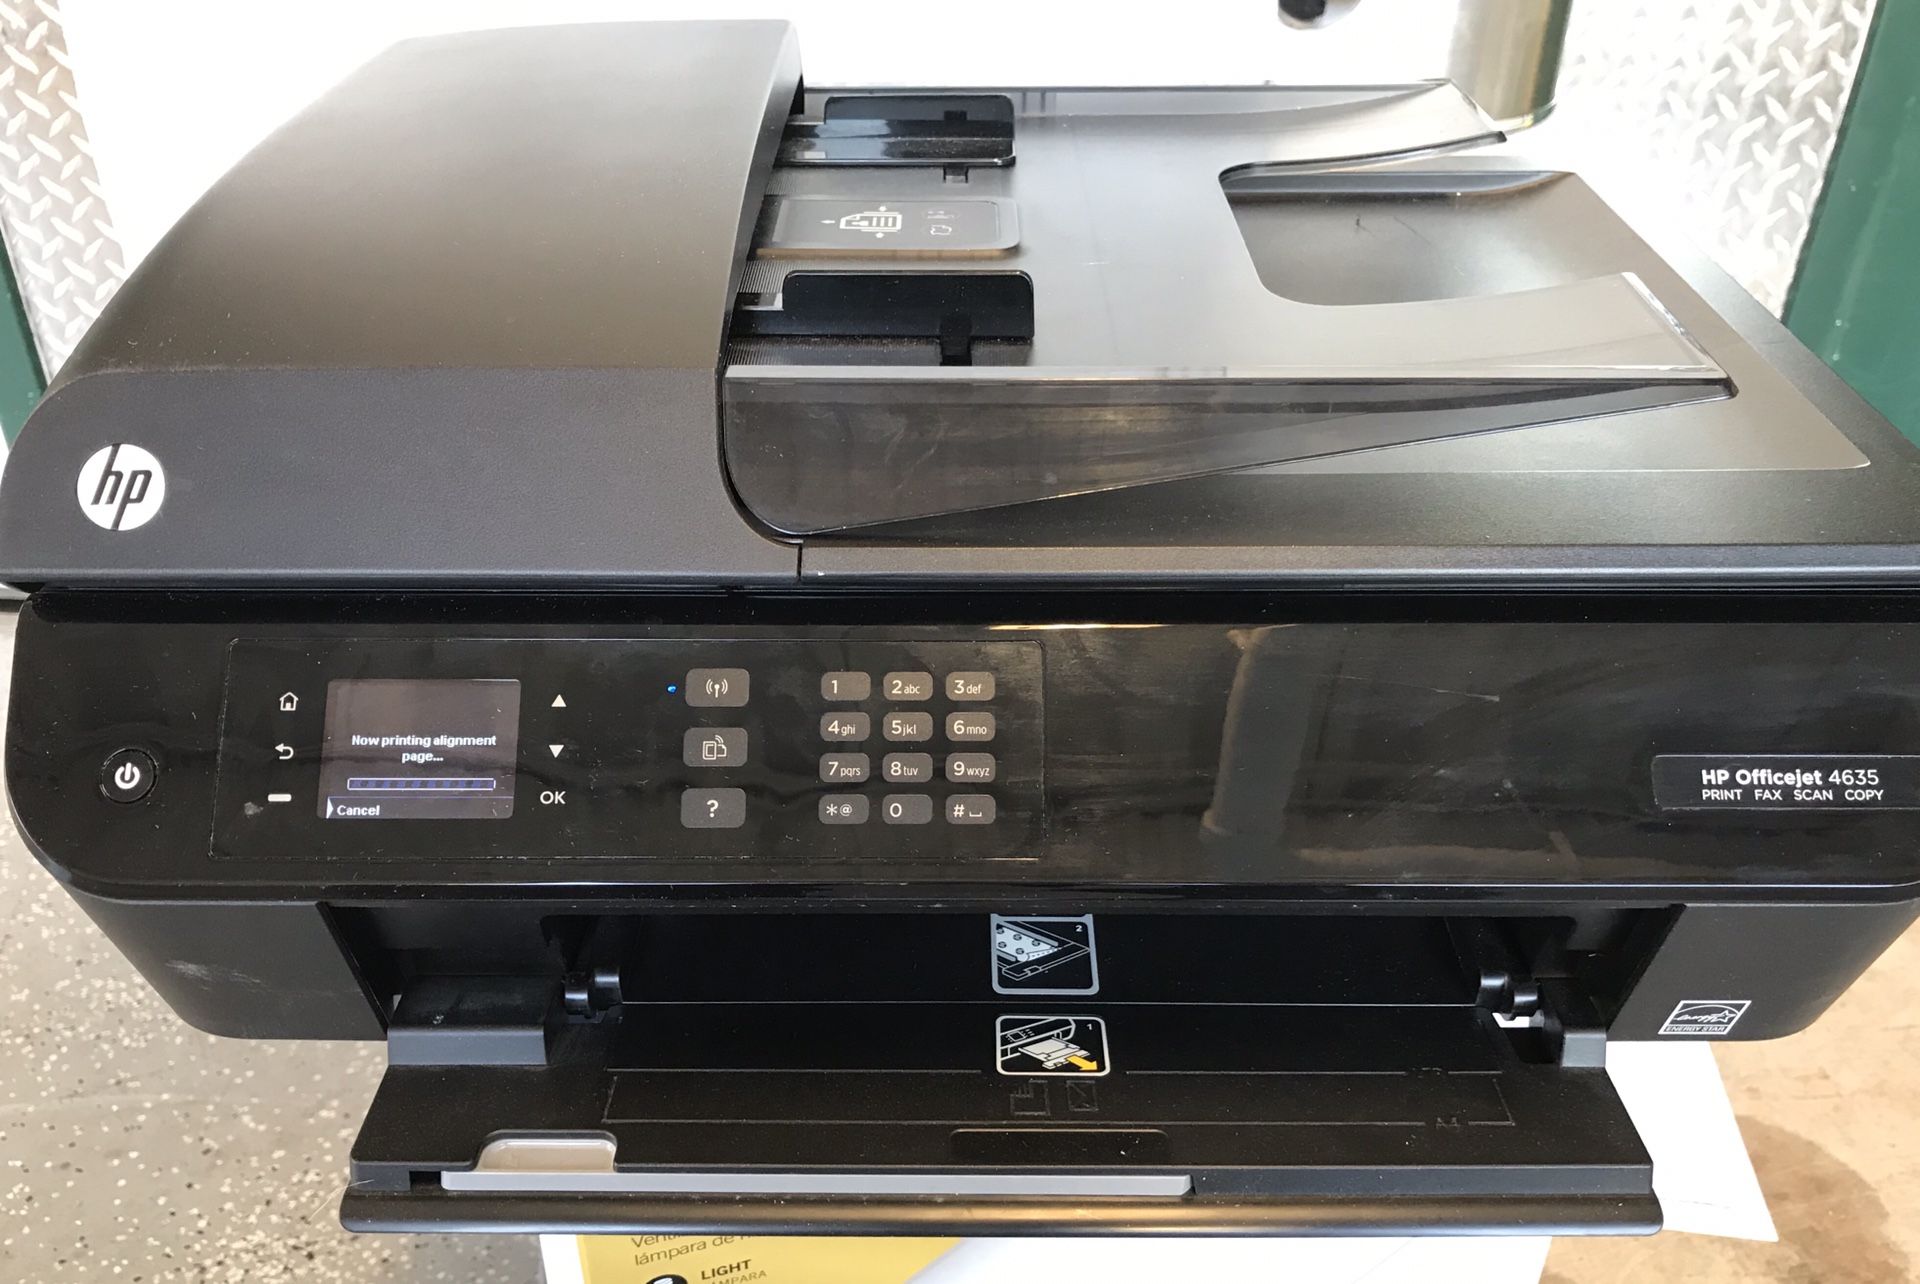 Hp Officejet 4635 Wireless E All In One Inkjet Printer Scan Copy Fax For Sale In Lanham Md 0345